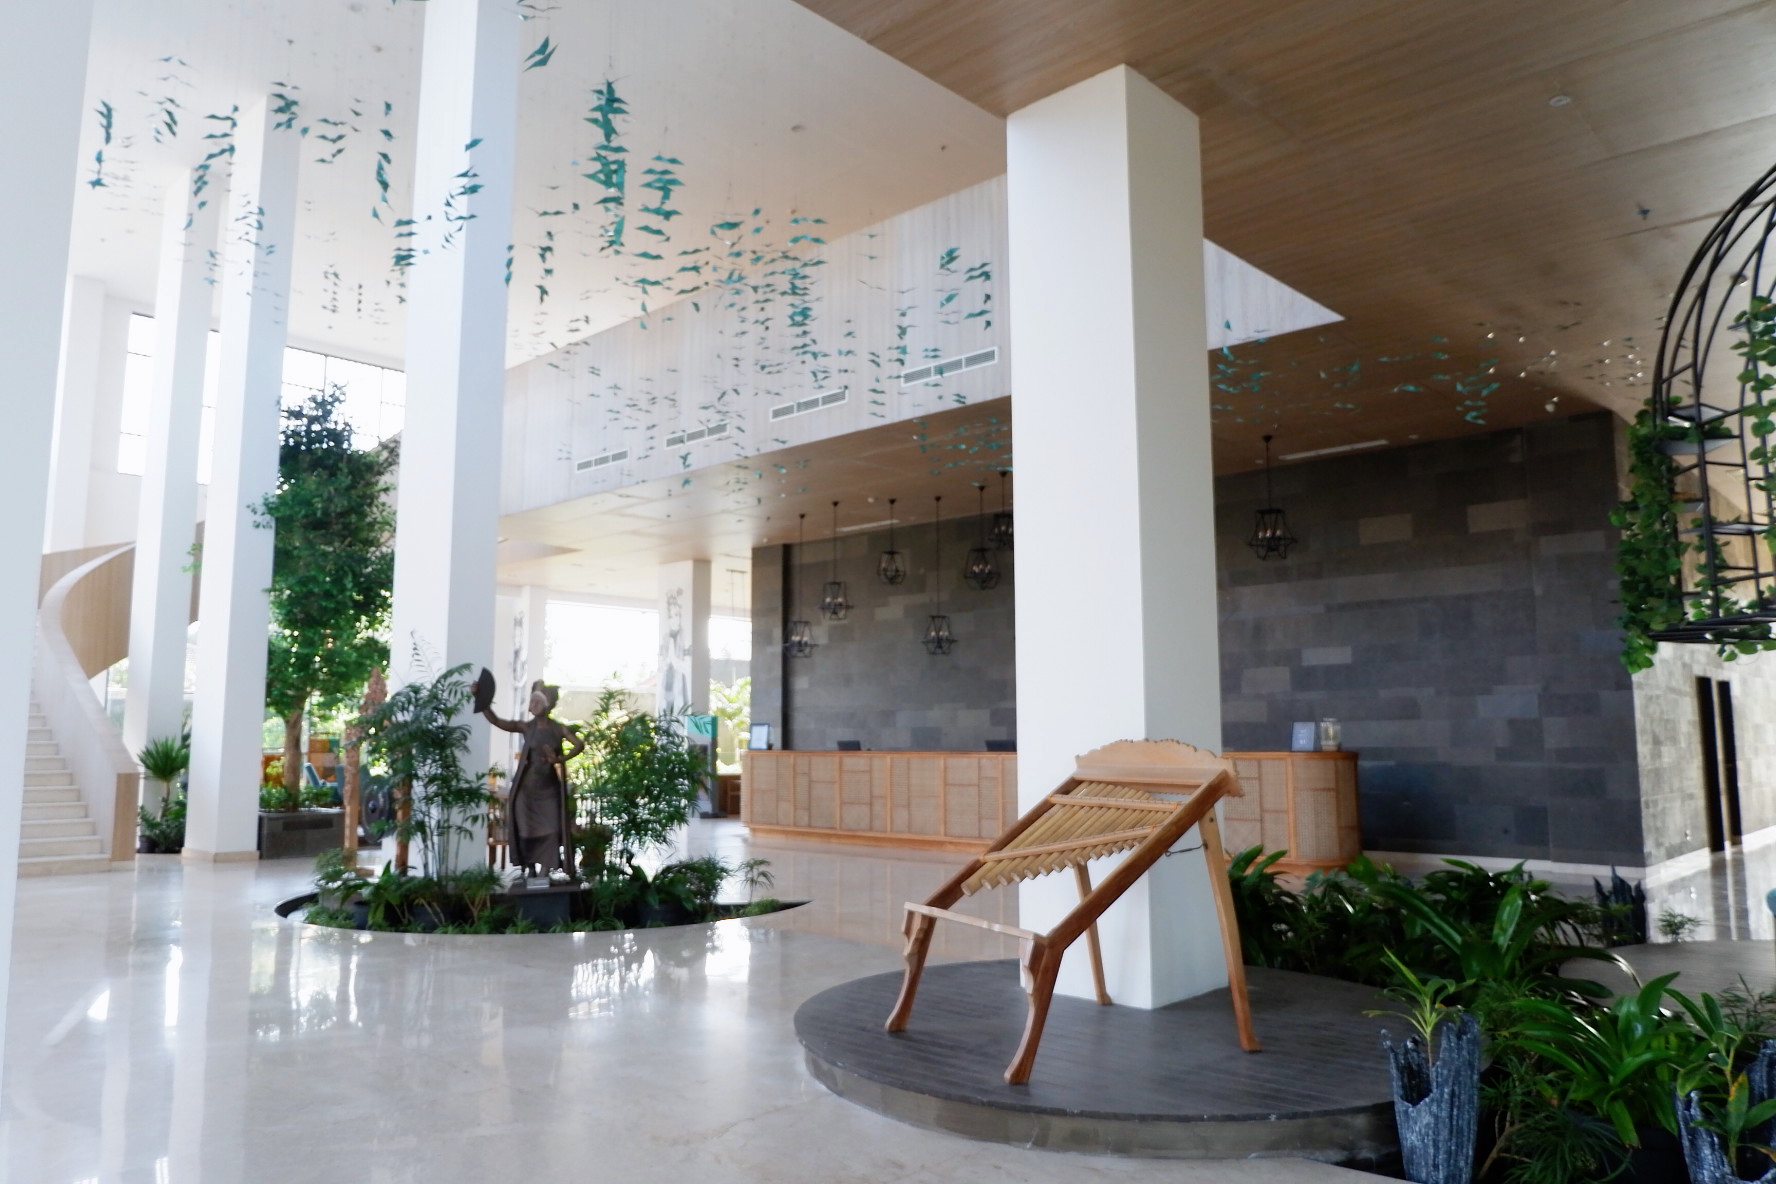 Paduan Budaya Hadir di Hotel Illira dengan Kenyamanan dan Keramahan Pelayanan